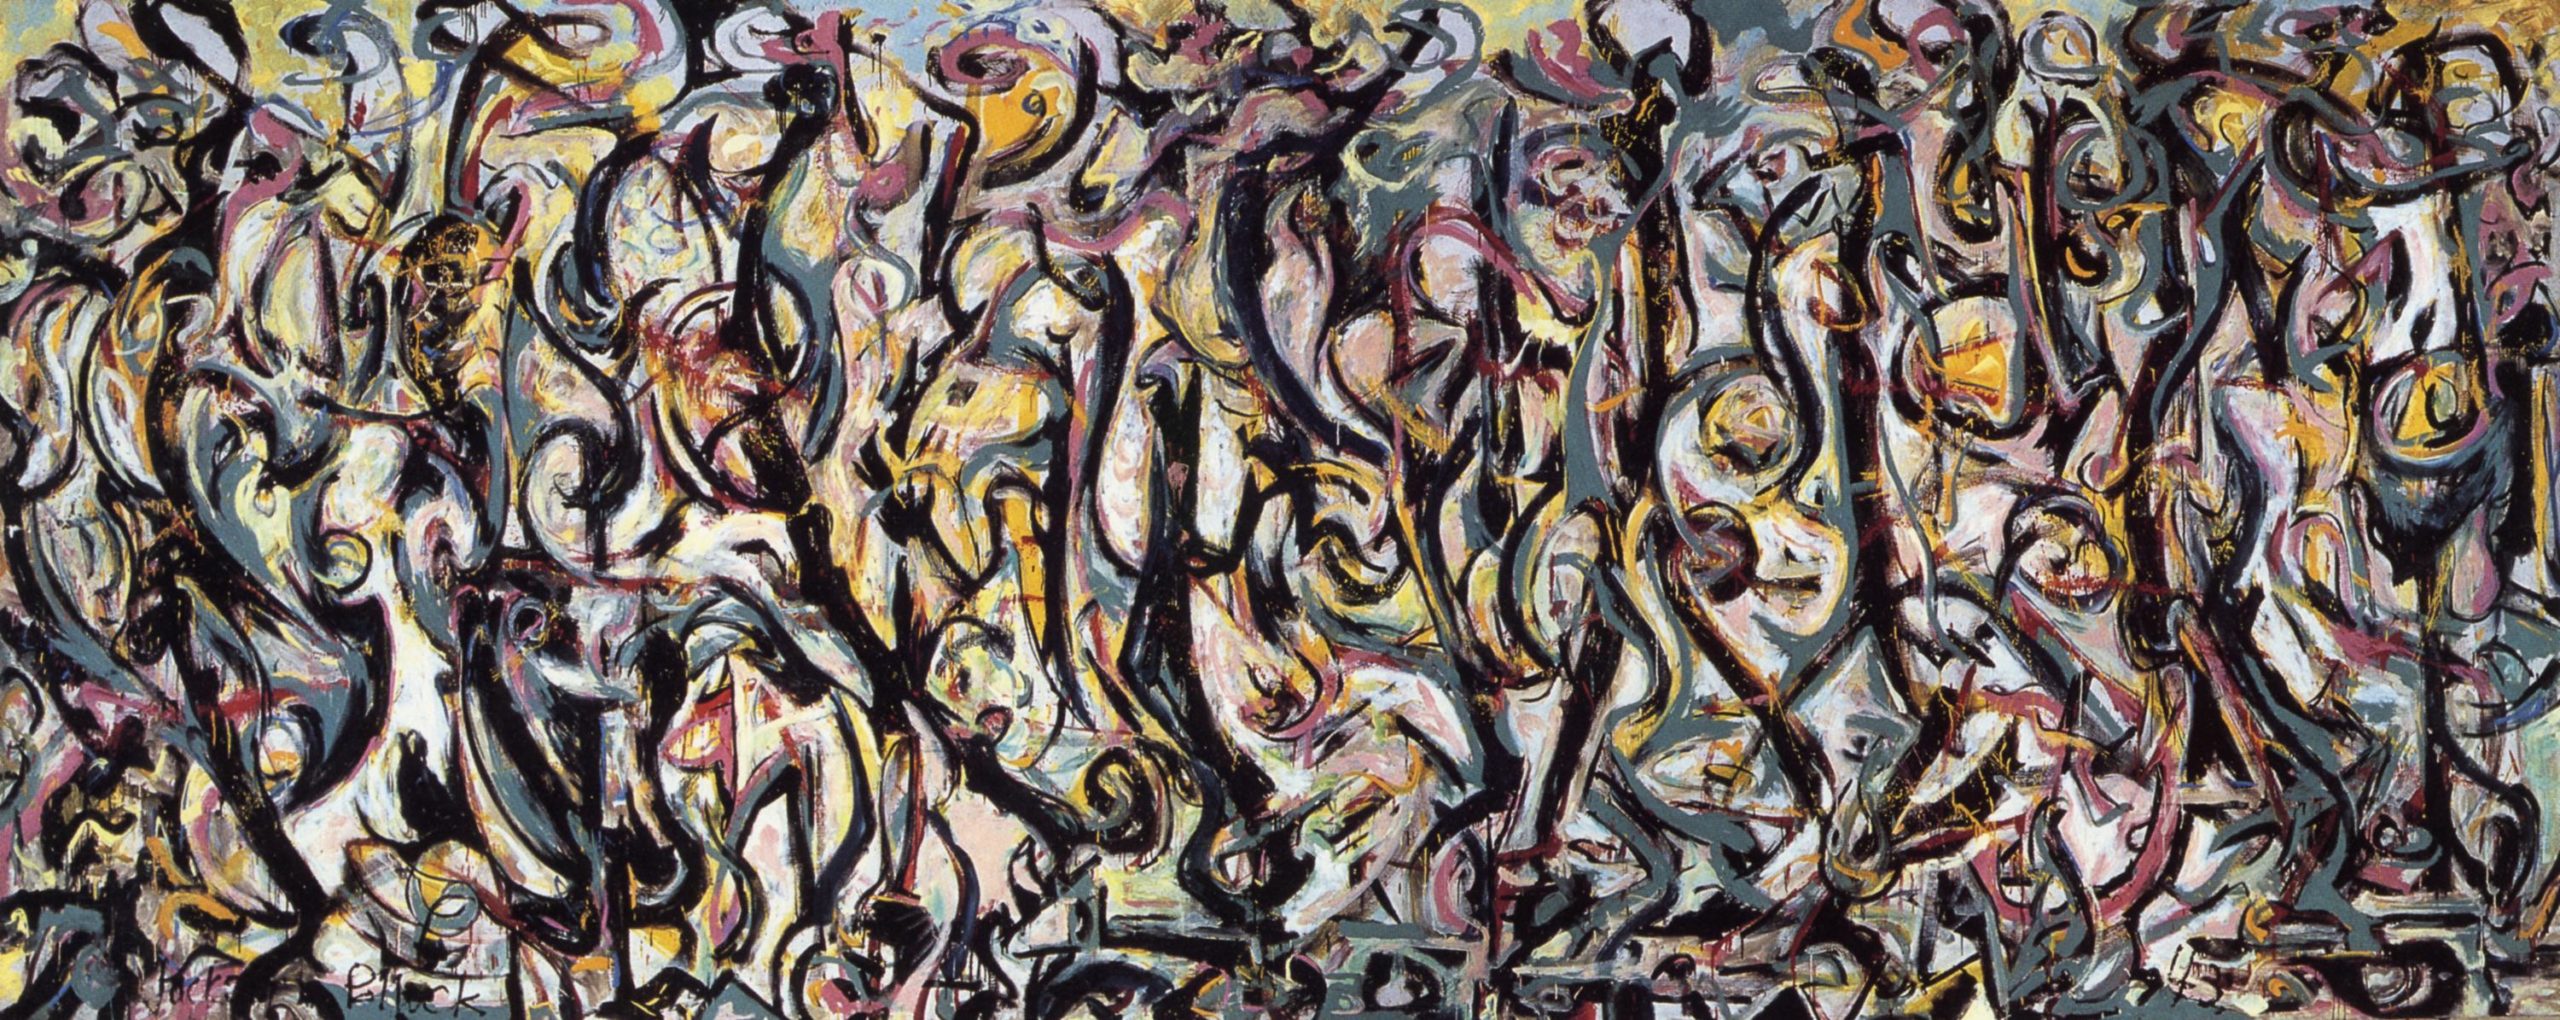 Pollock, Guggenheim & the “Mural”